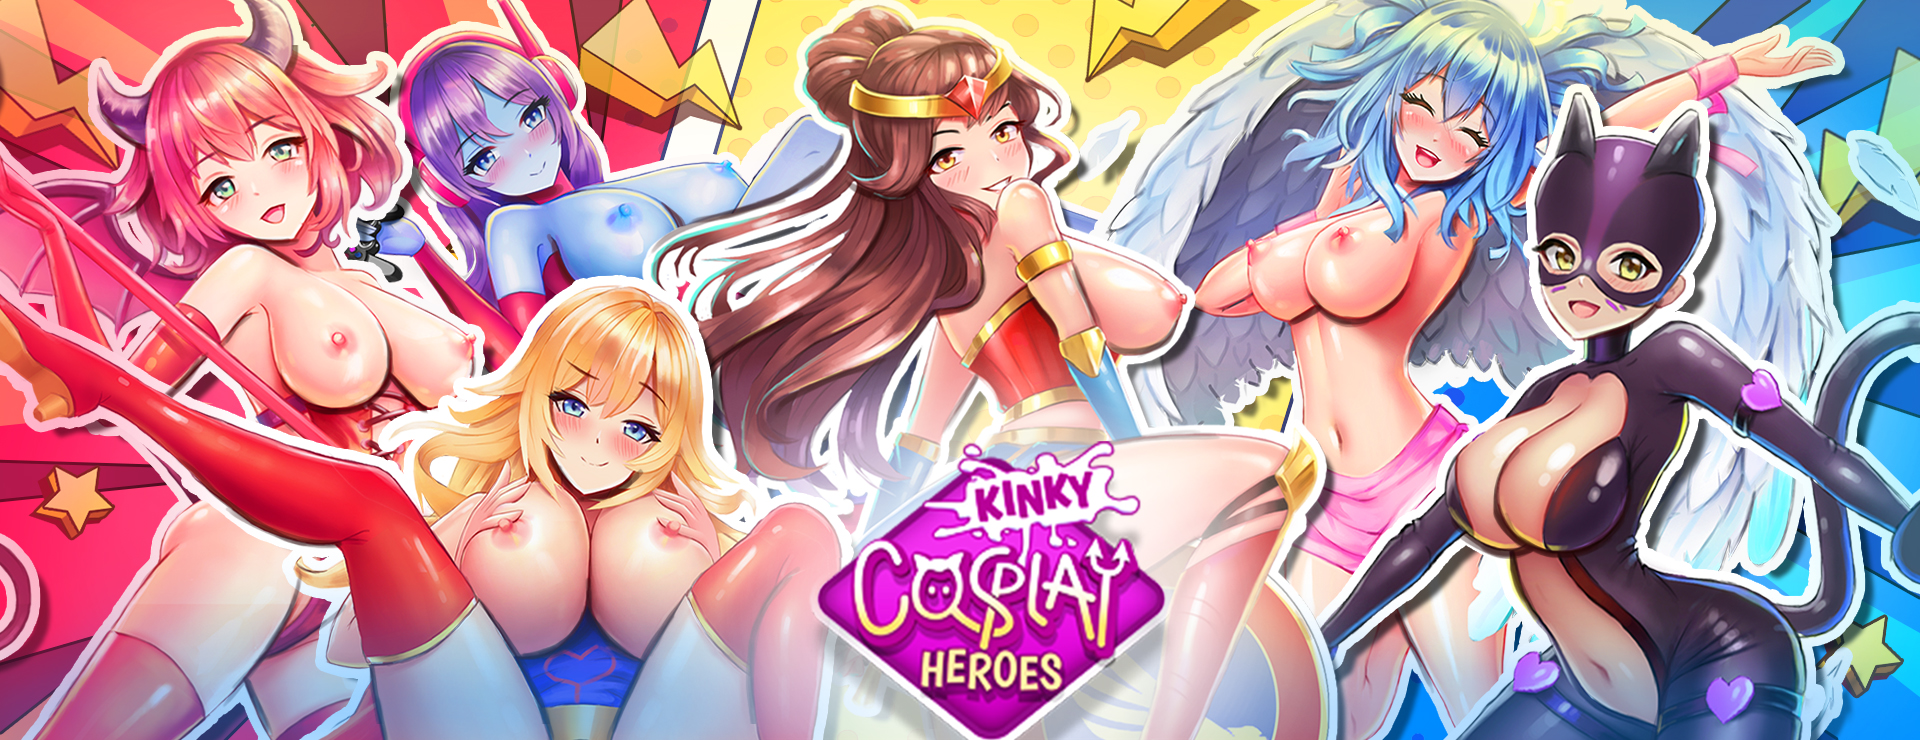 Kinky Cosplay Heroes - Casual Game